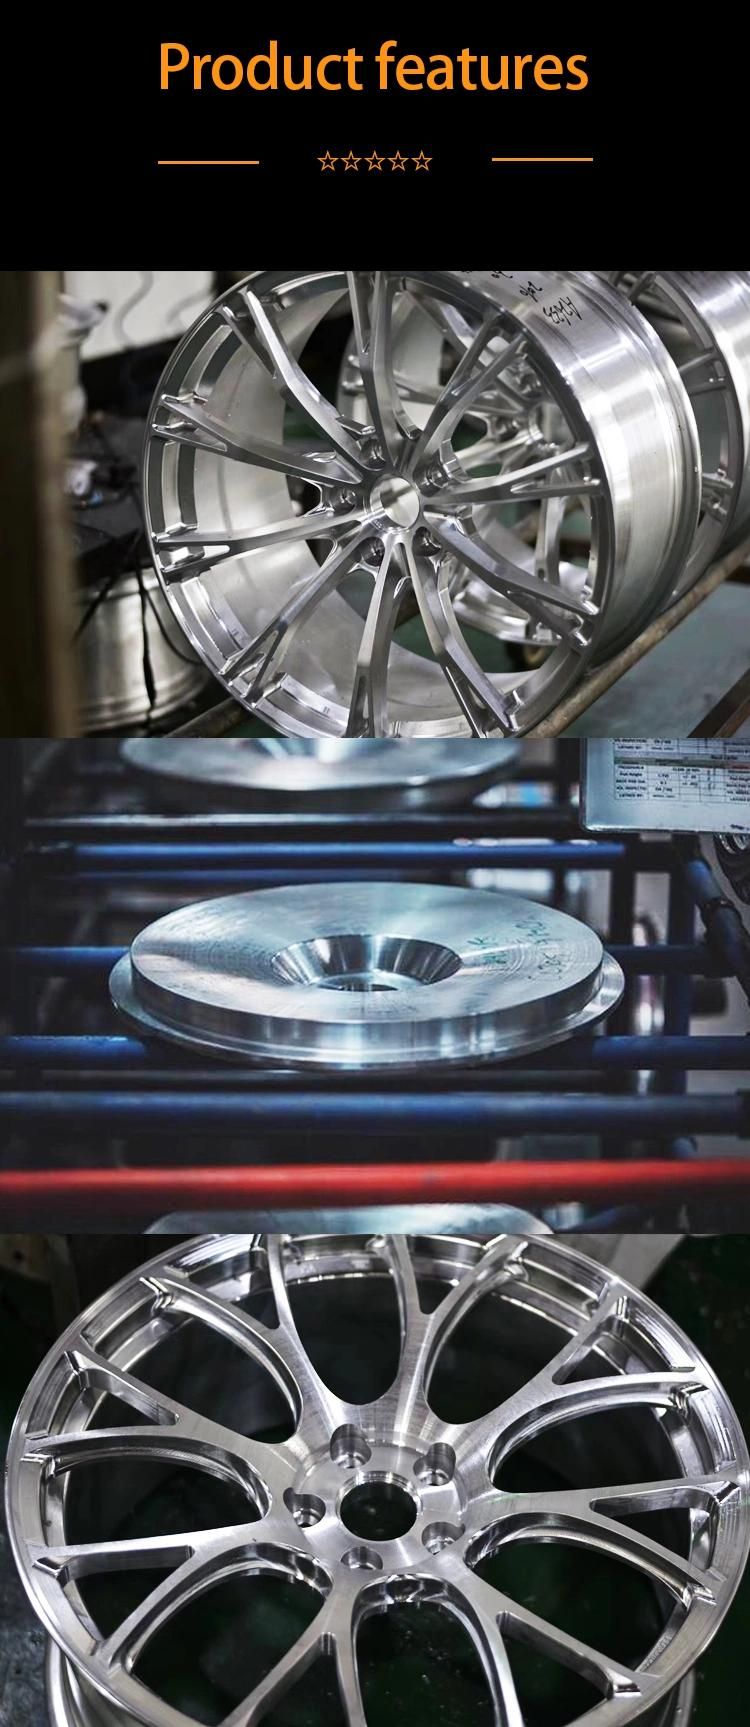   Alloy Rims Sport Aluminum Wheels for Customized Mags Rims Alloy Wheels Rims Wheels Forged Aluminum with Black Matt